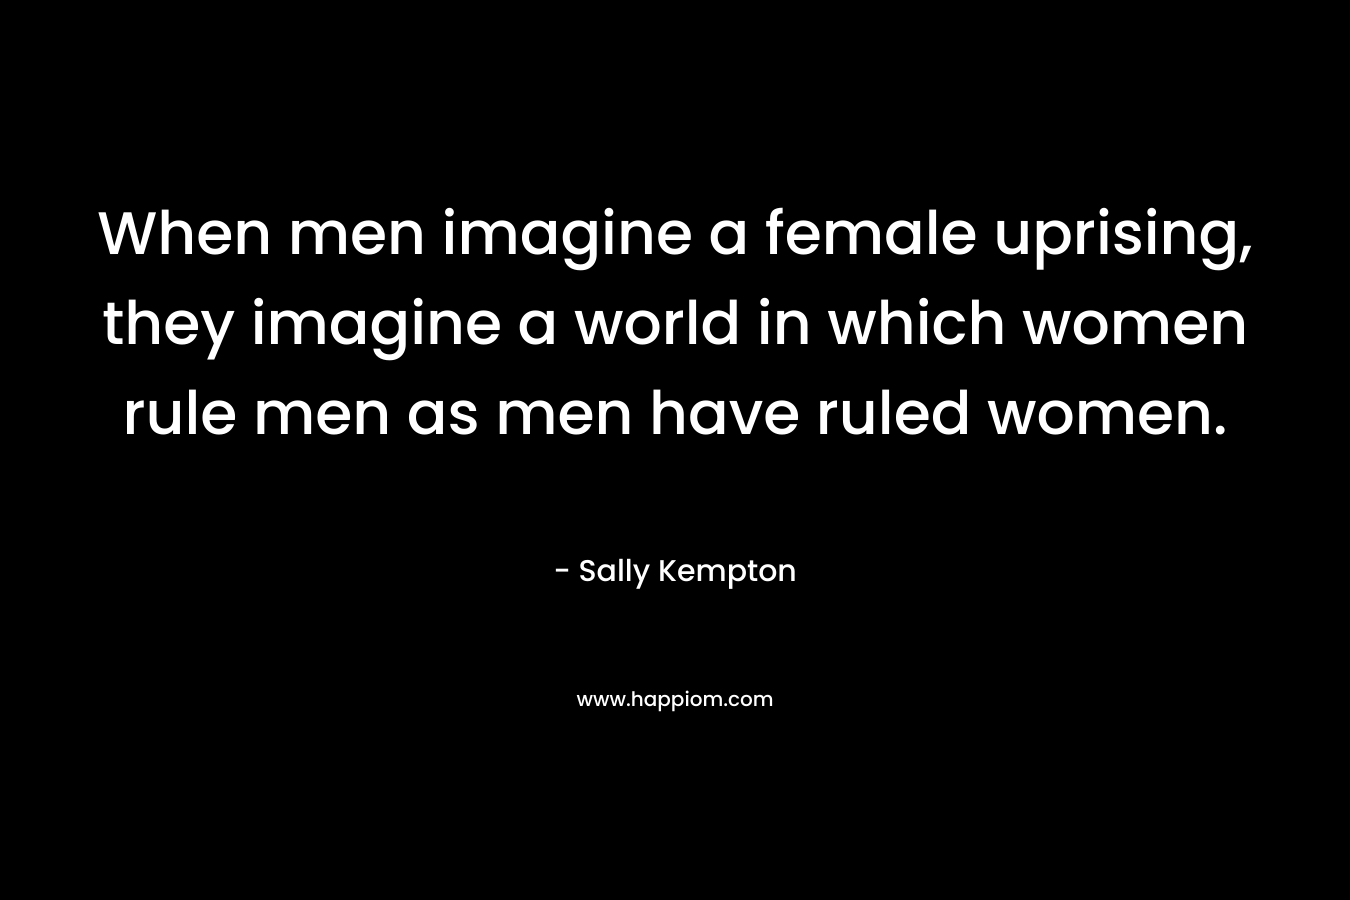 When men imagine a female uprising, they imagine a world in which women rule men as men have ruled women.